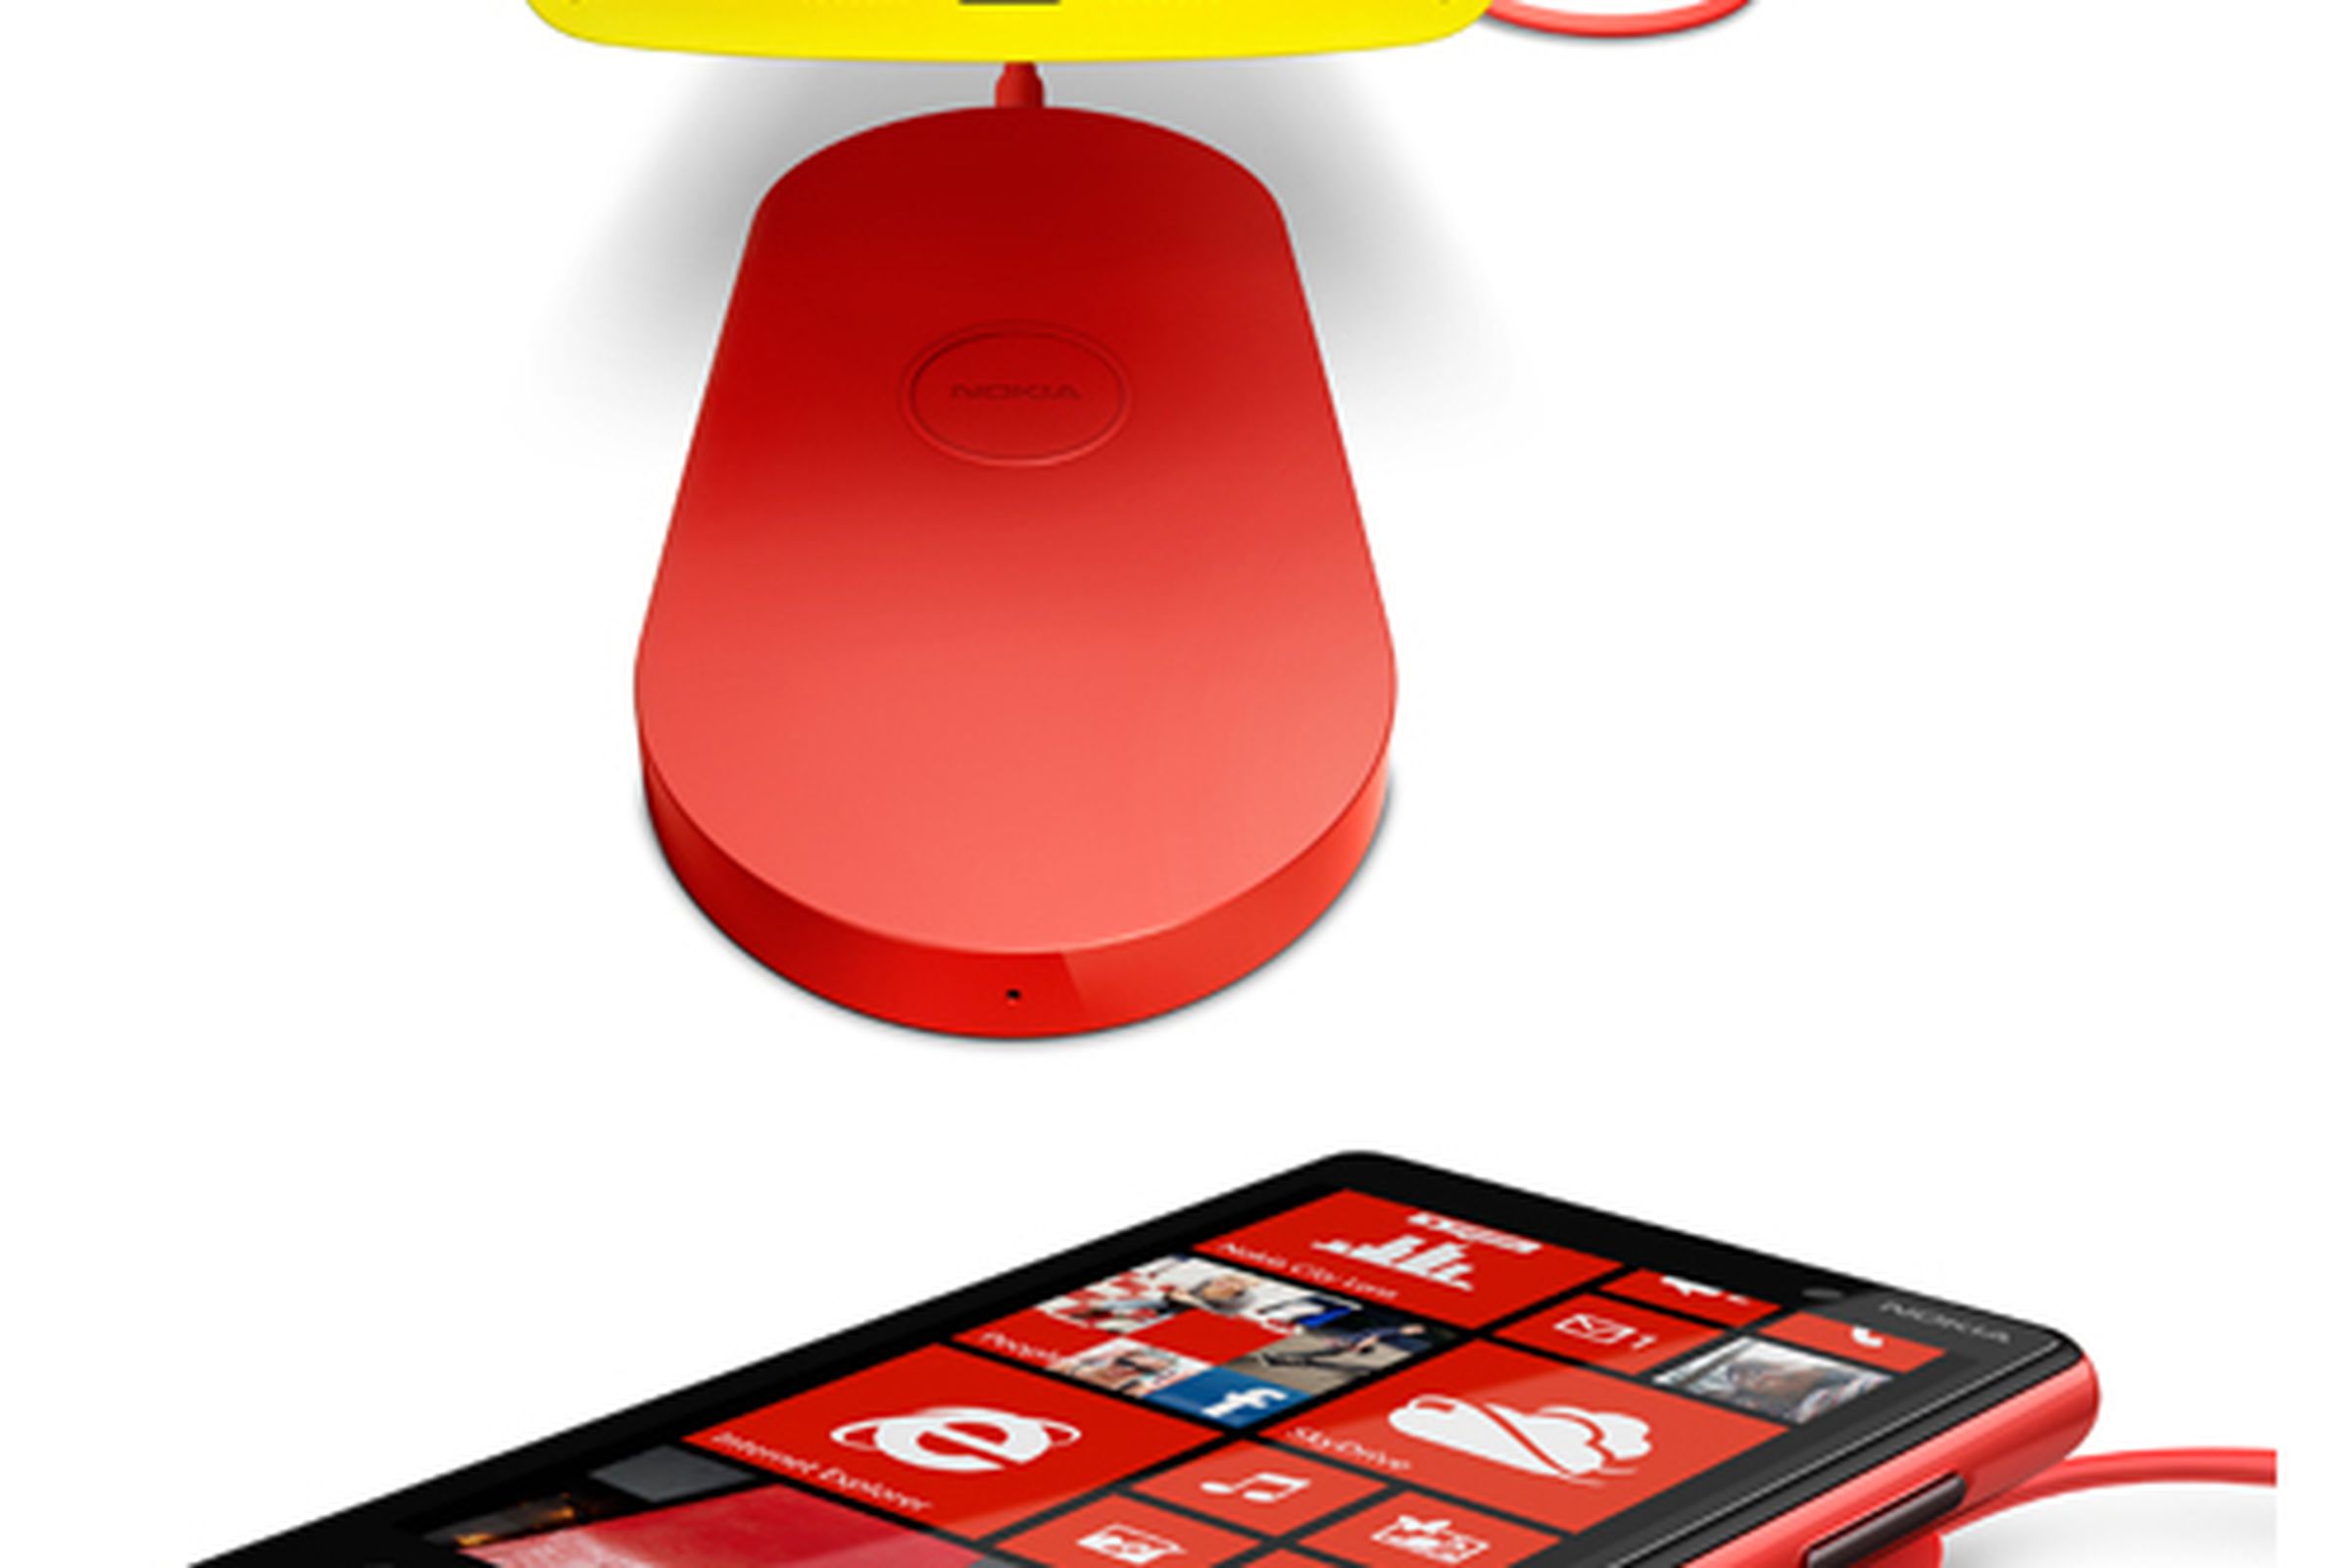 Lumia 920 wireless charging pad